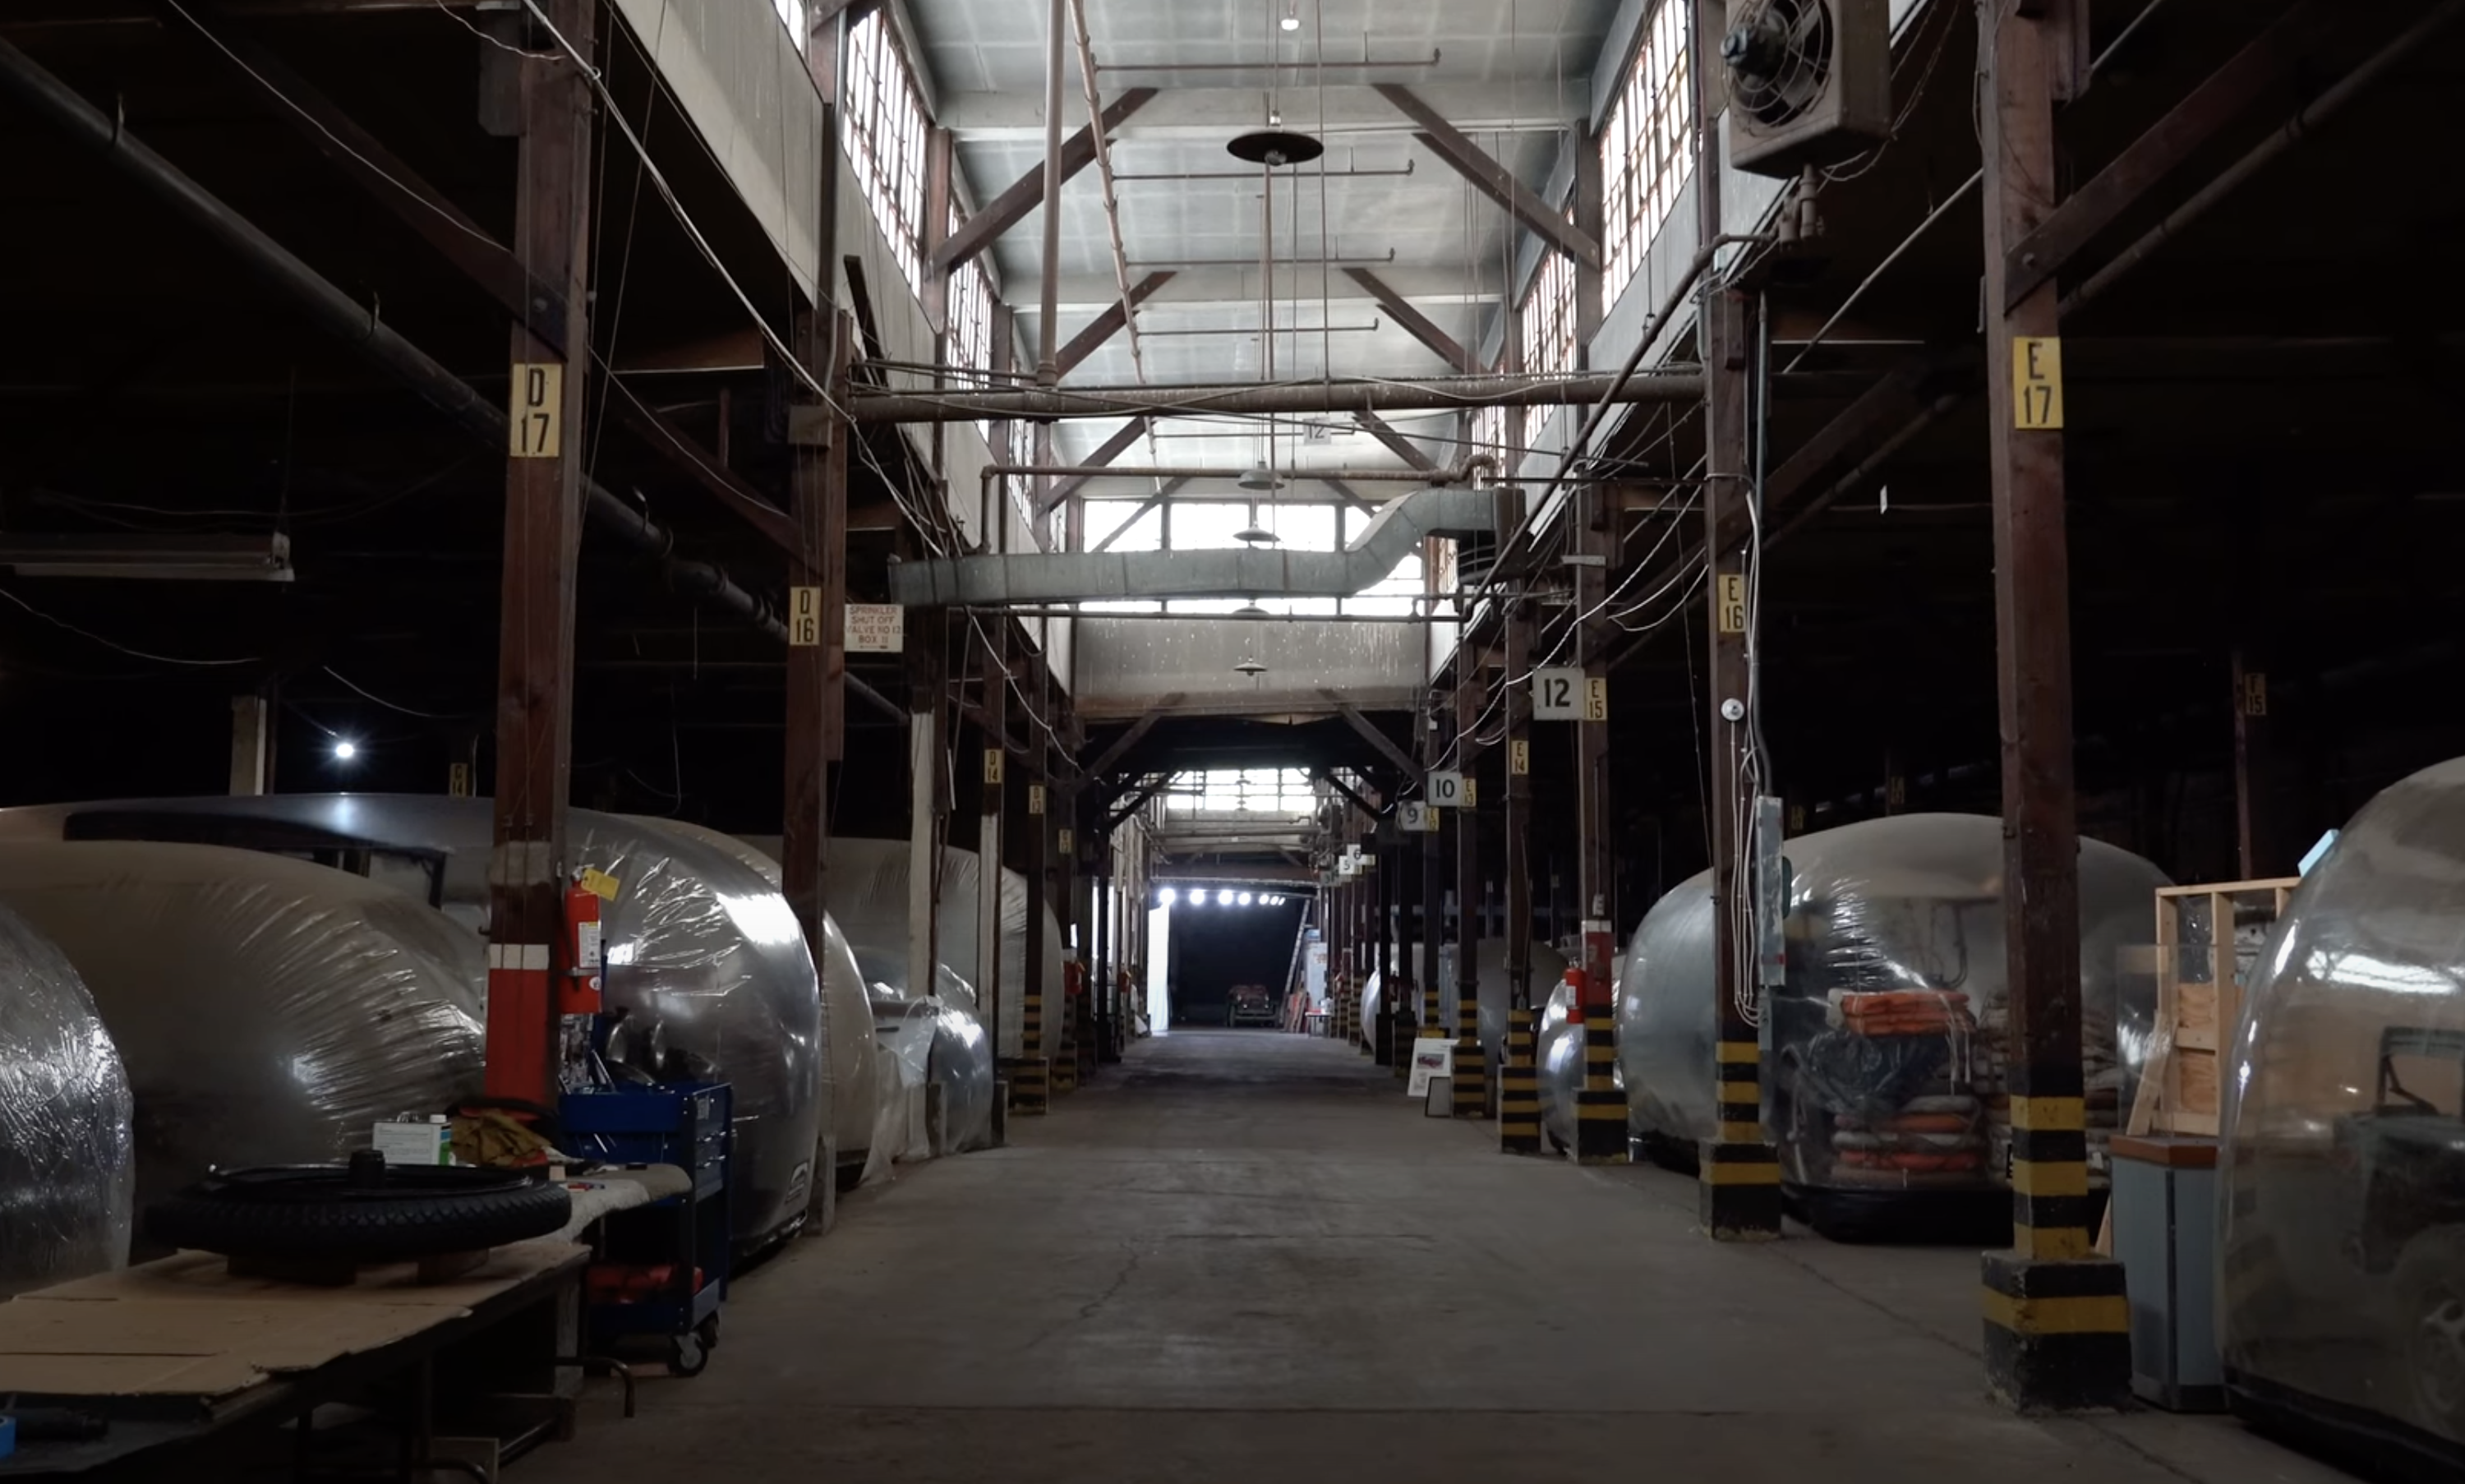 Video Reveal: Tour a Top Secret Detroit Car Collection That's Better Than a Barn Find